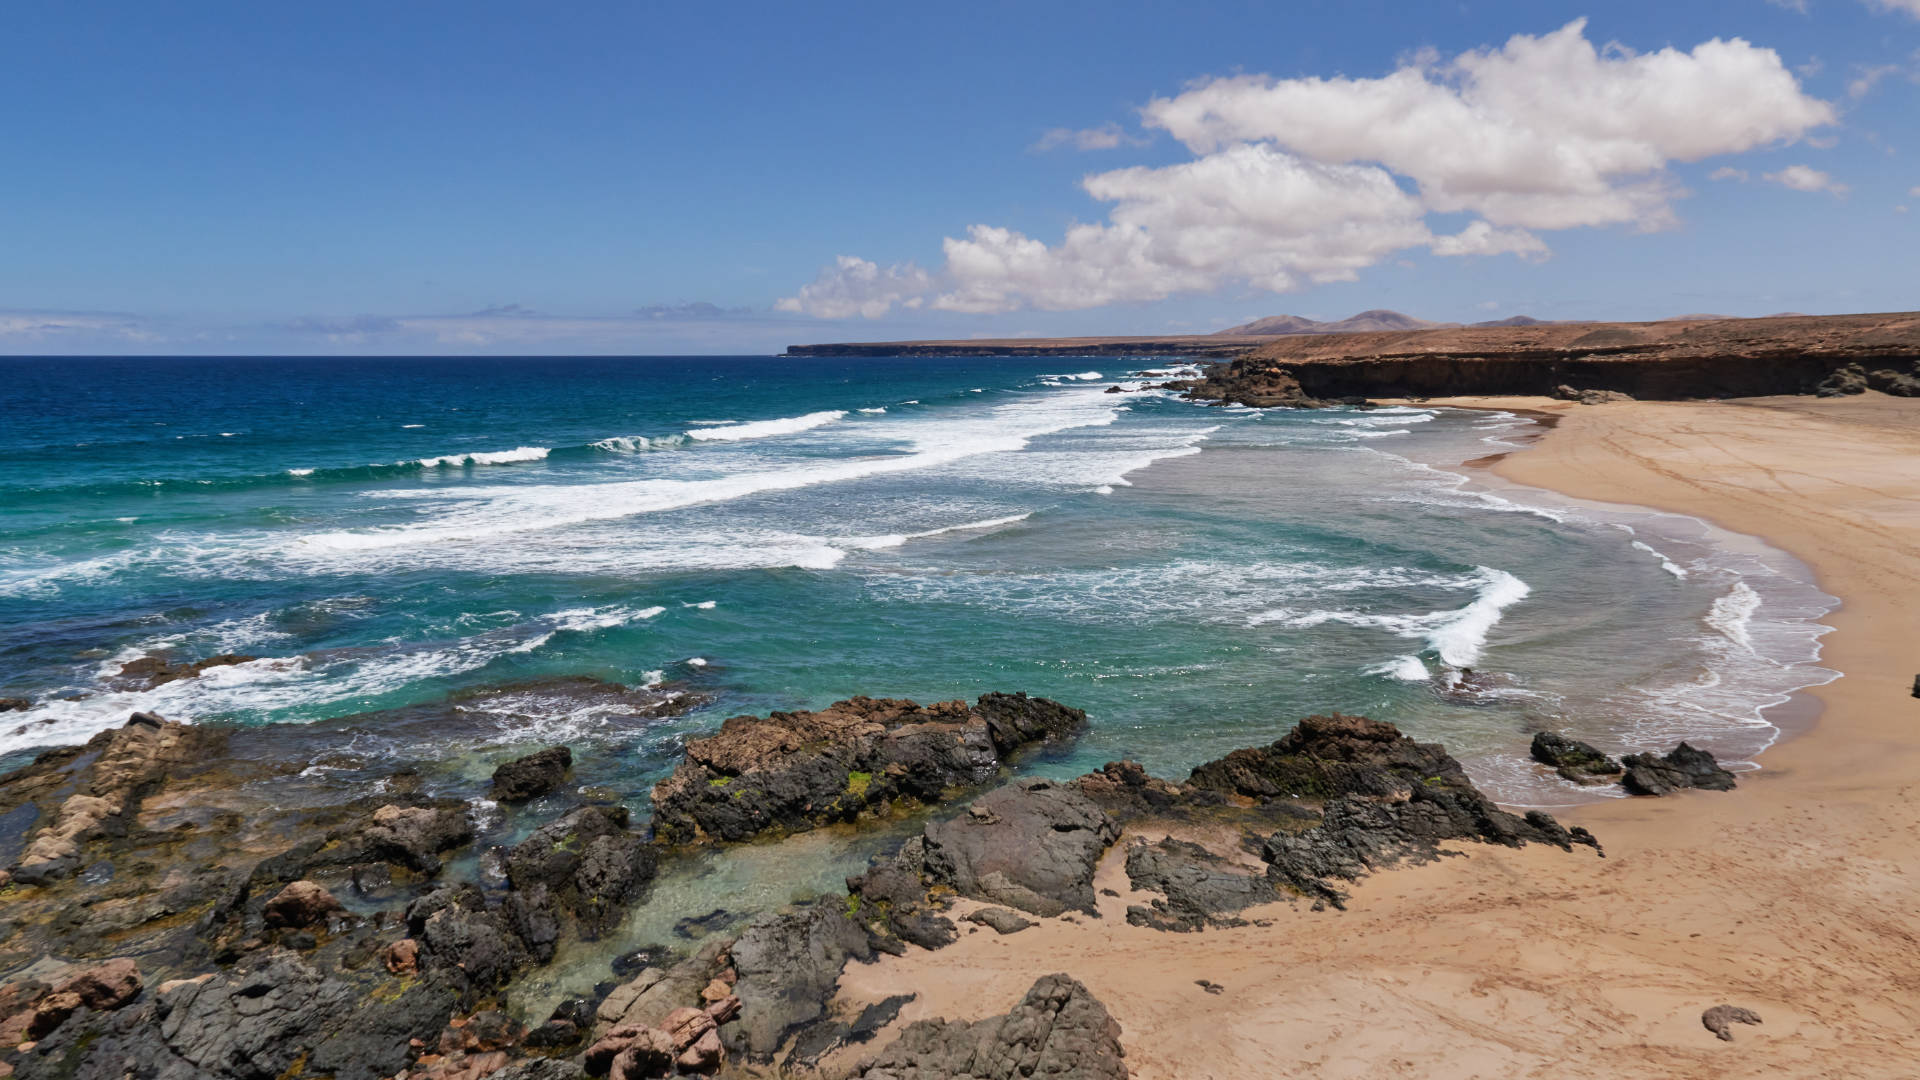 Der Strand Playa Jarugo nahe Tindaya Fuerteventura.